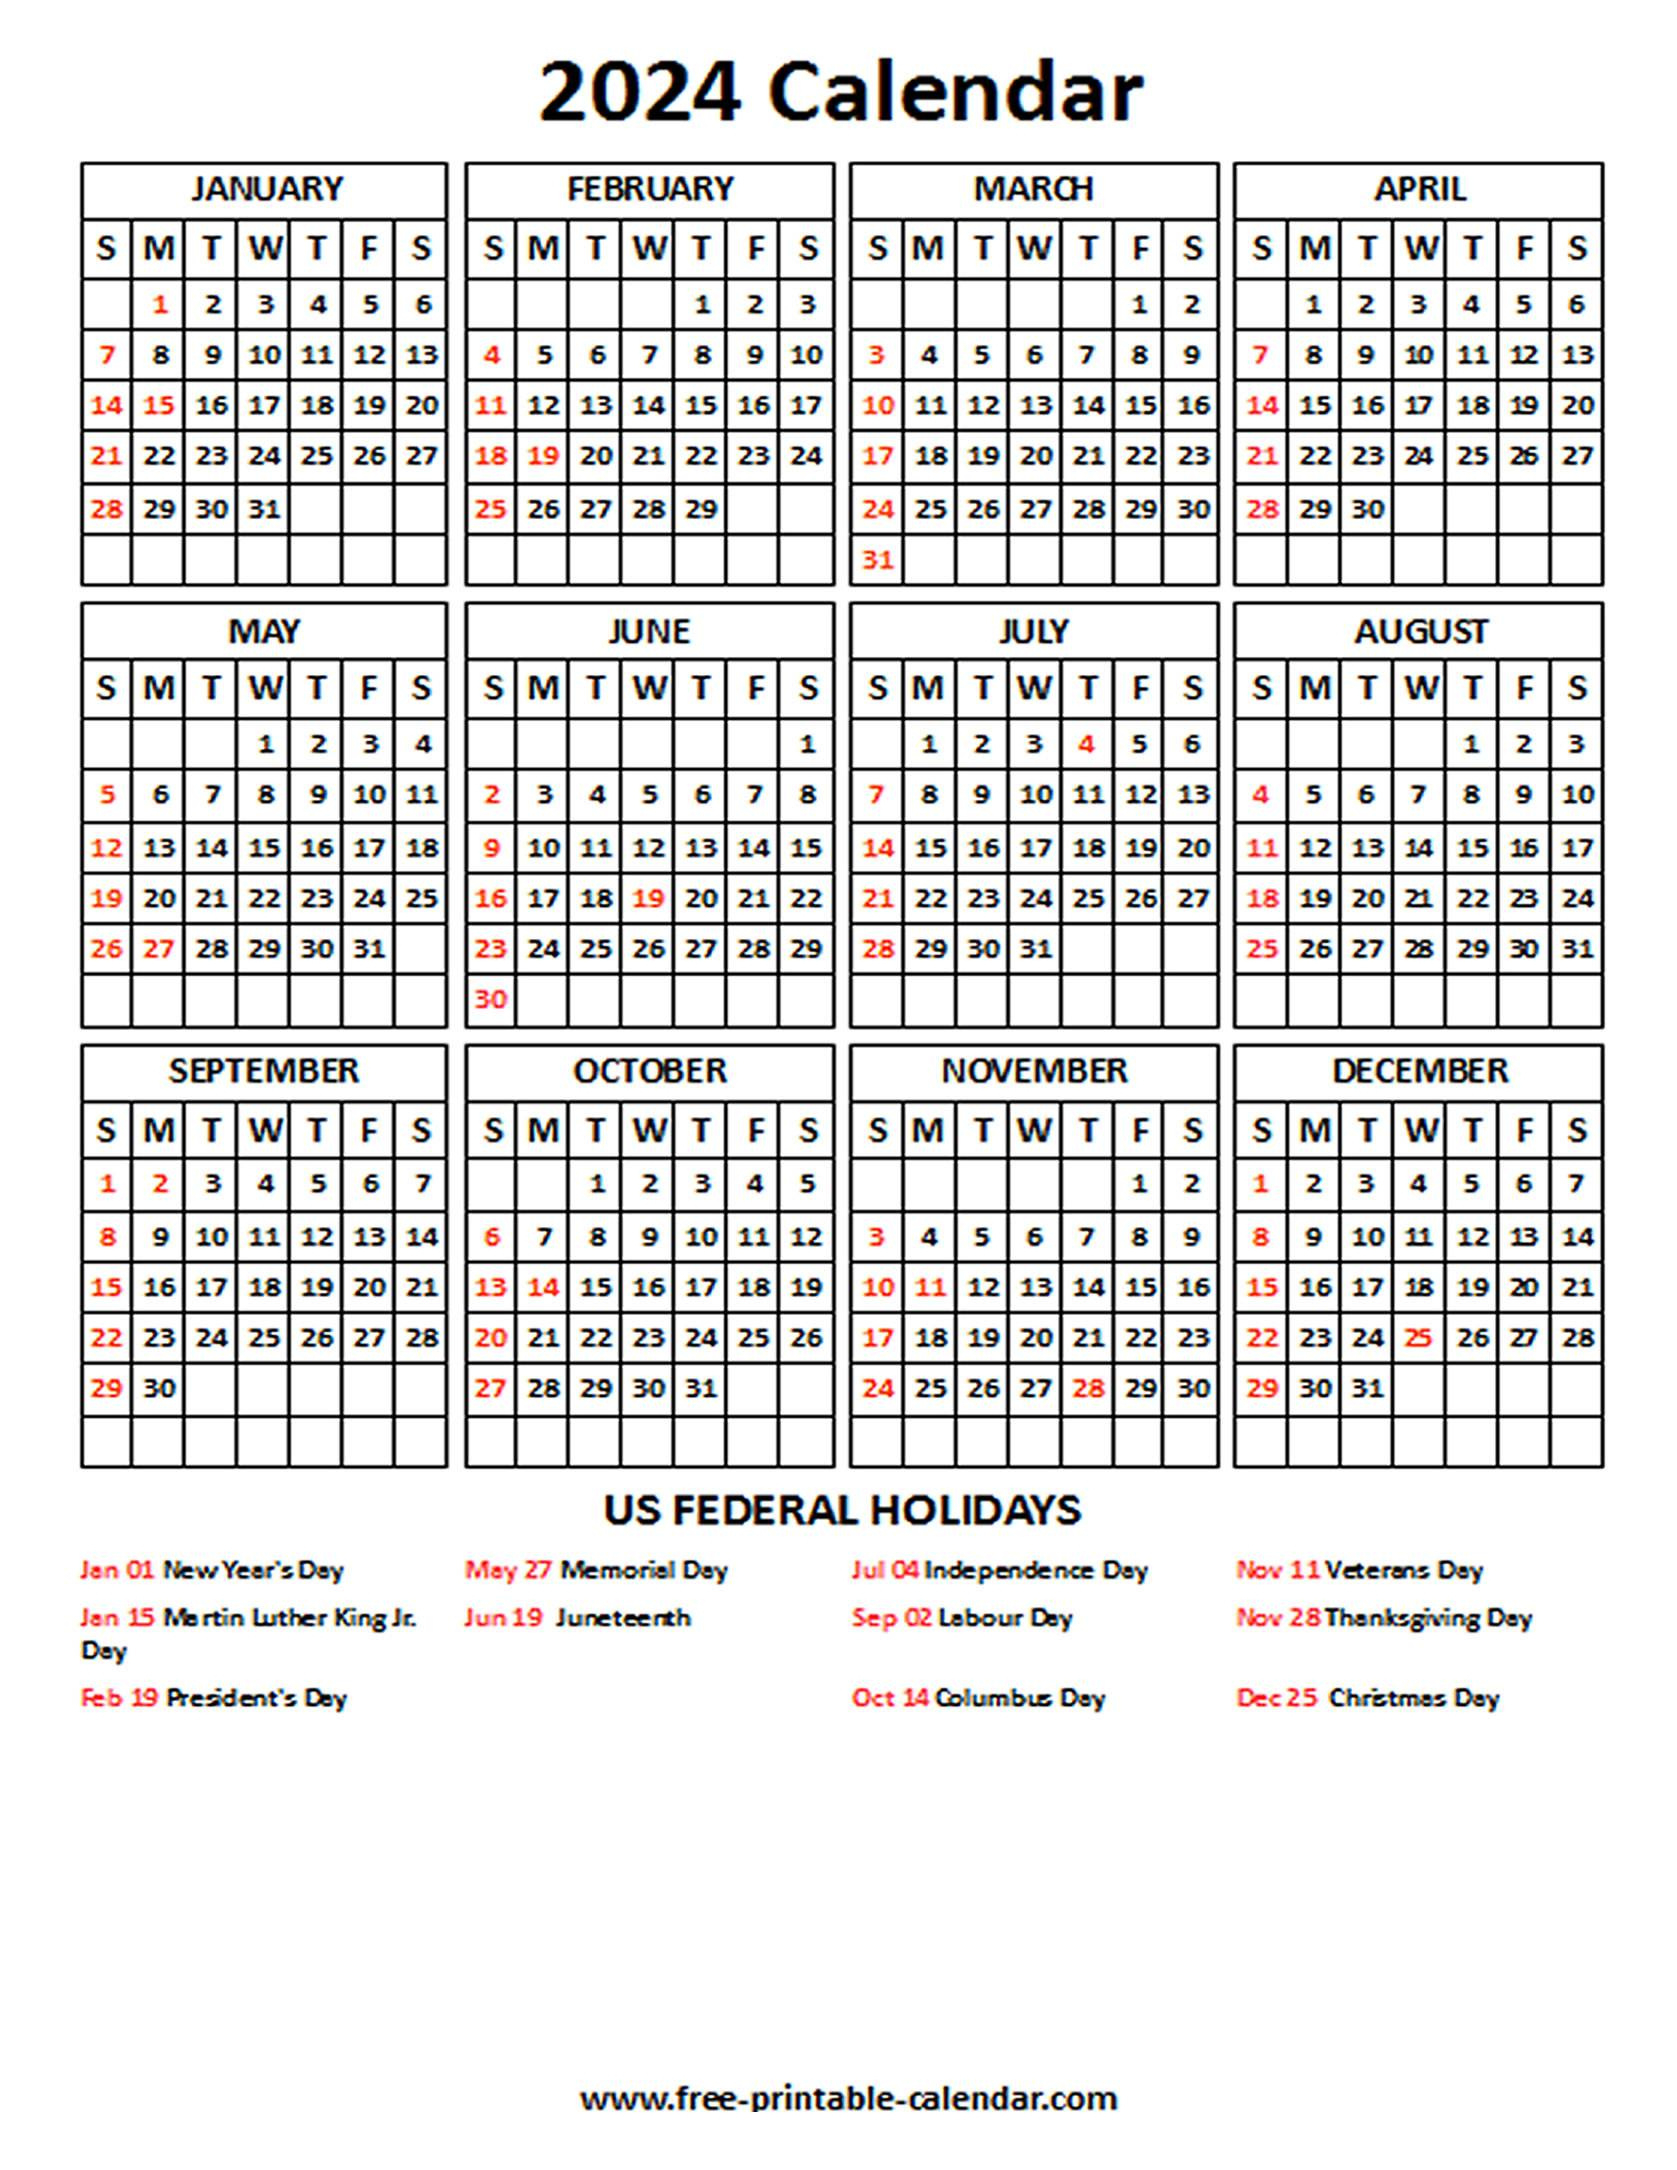 2024 Calendar With Us Holidays - Free-Printable-Calendar intended for Free Printable Calendar 2024 With Federal Holidays